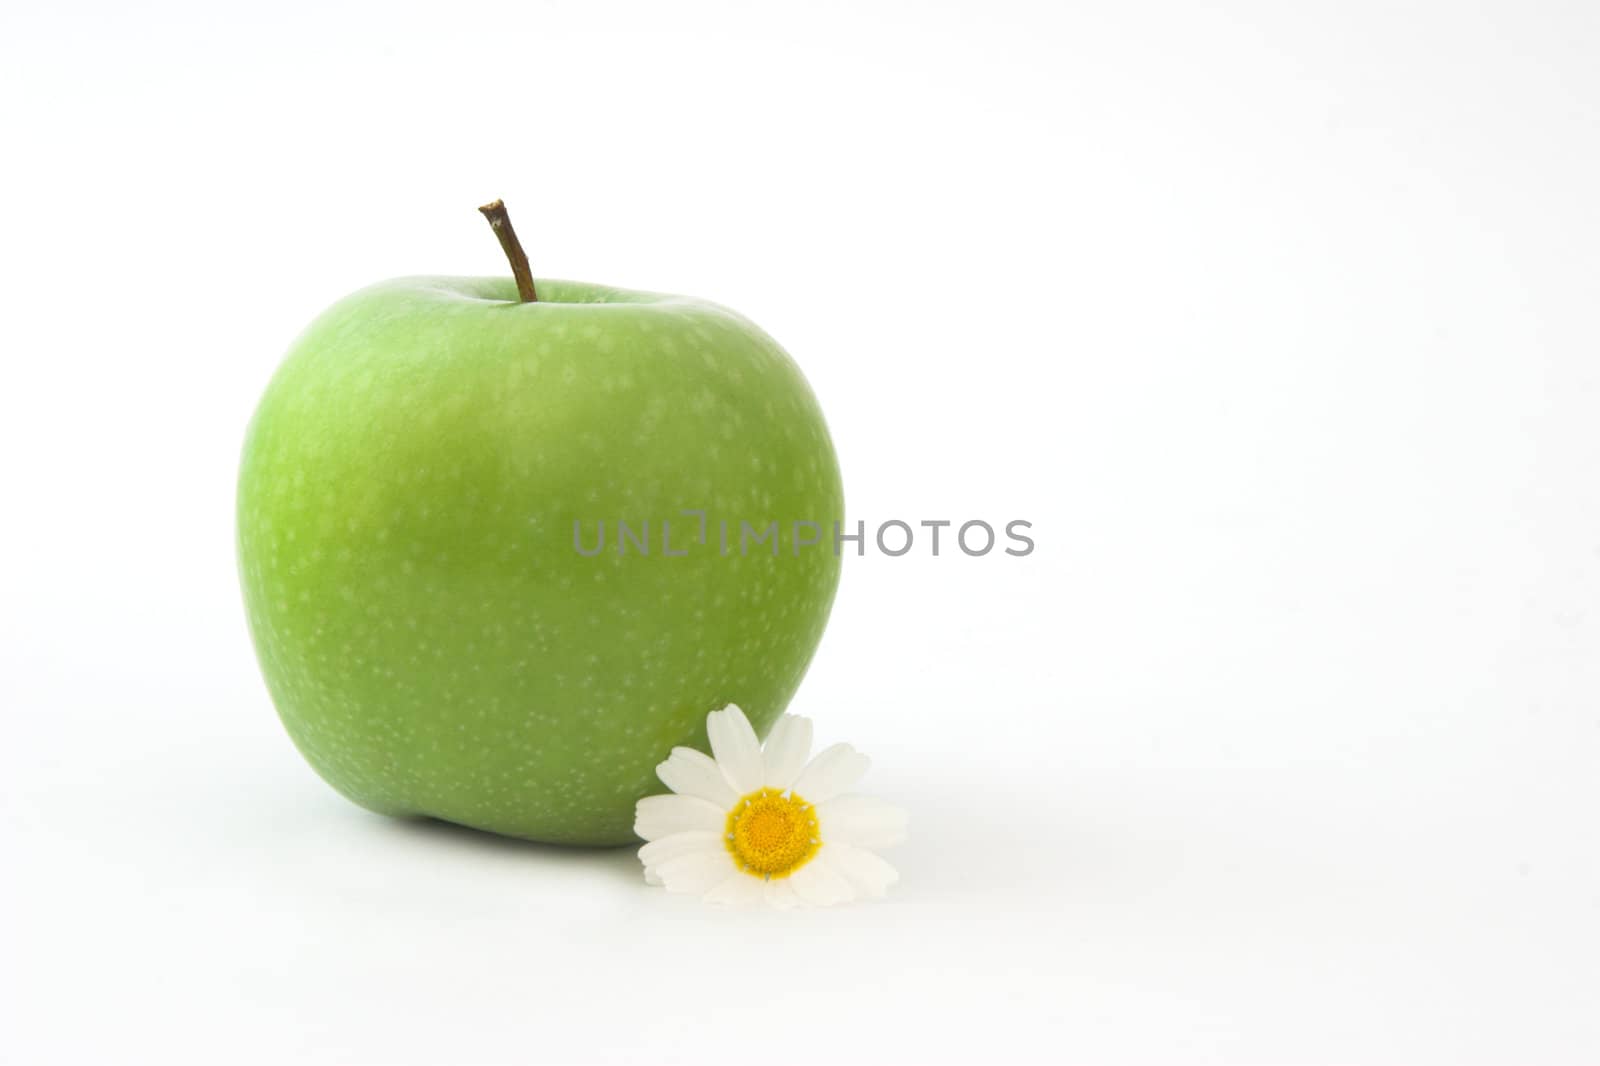 Grenn Apple with a flower